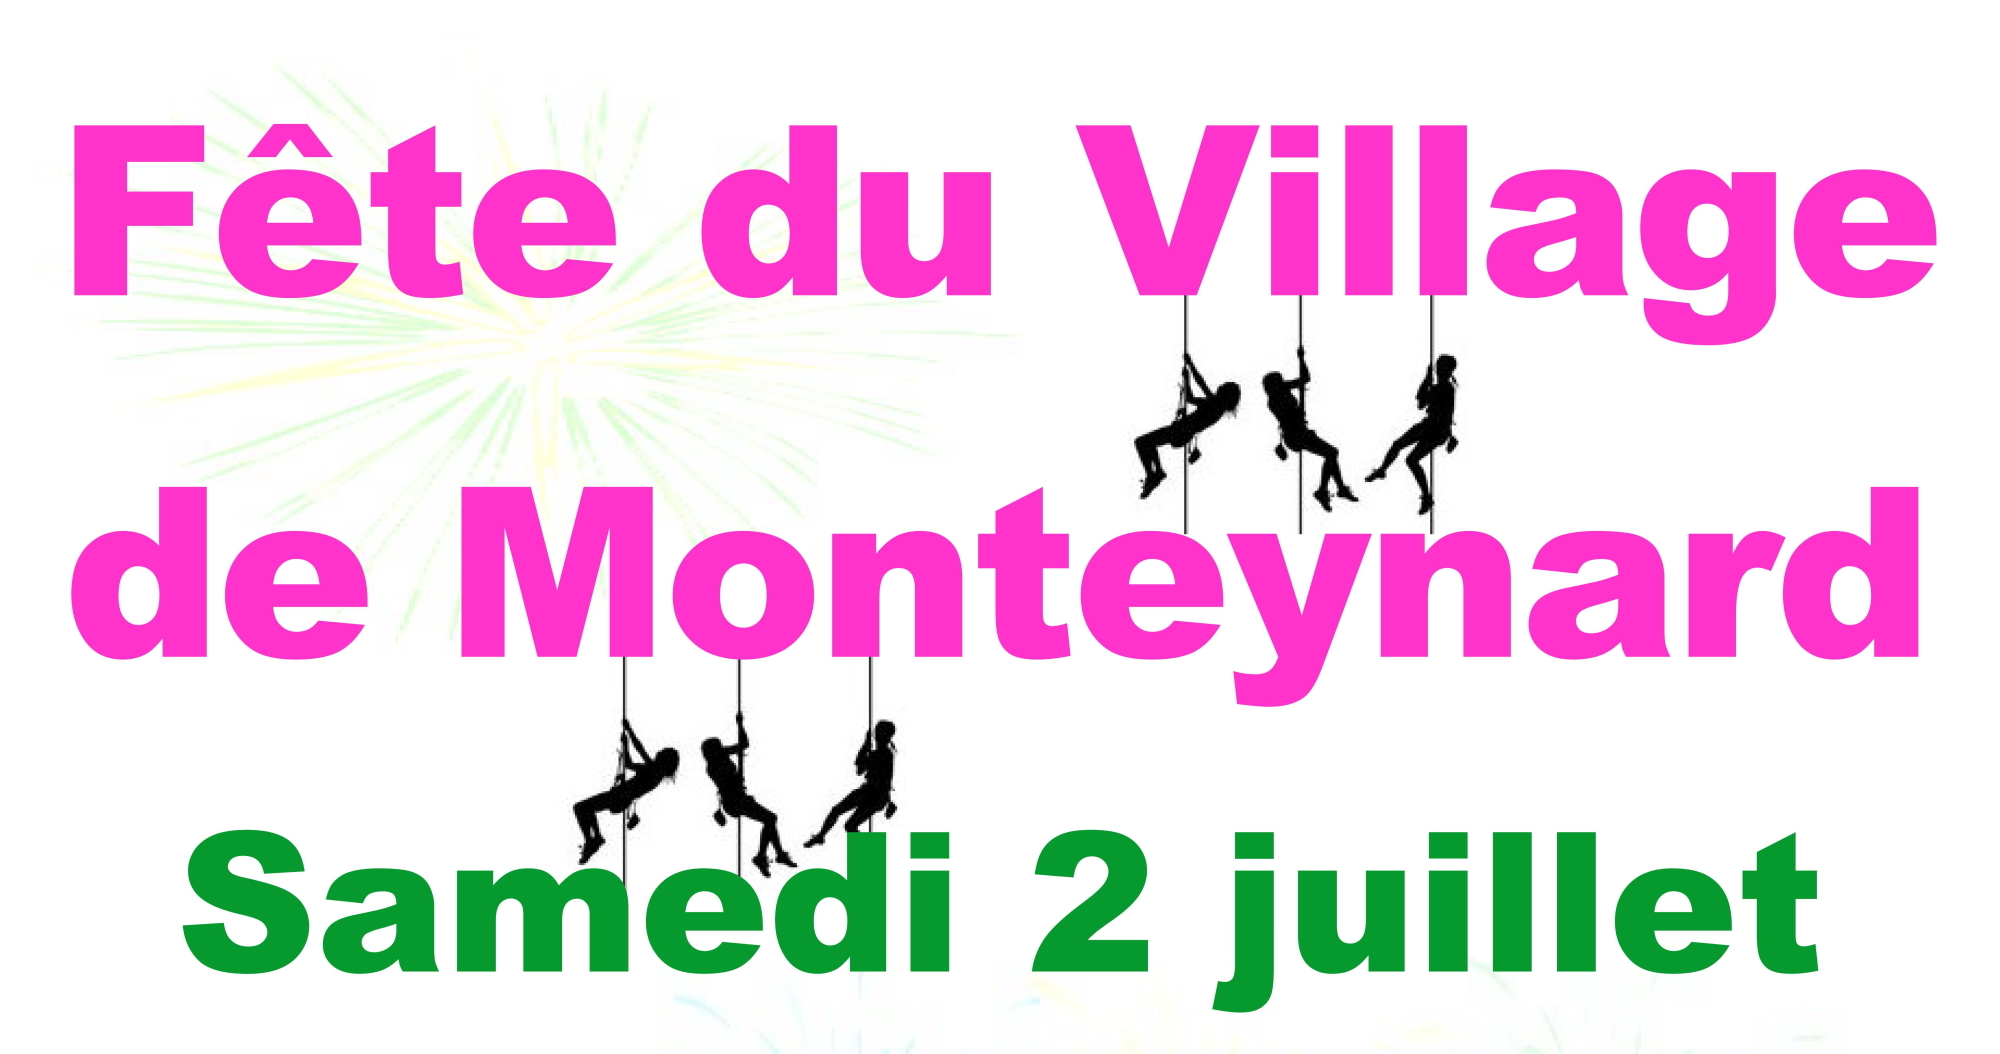 Le 2 Juillet – Fête du village de Monteynard